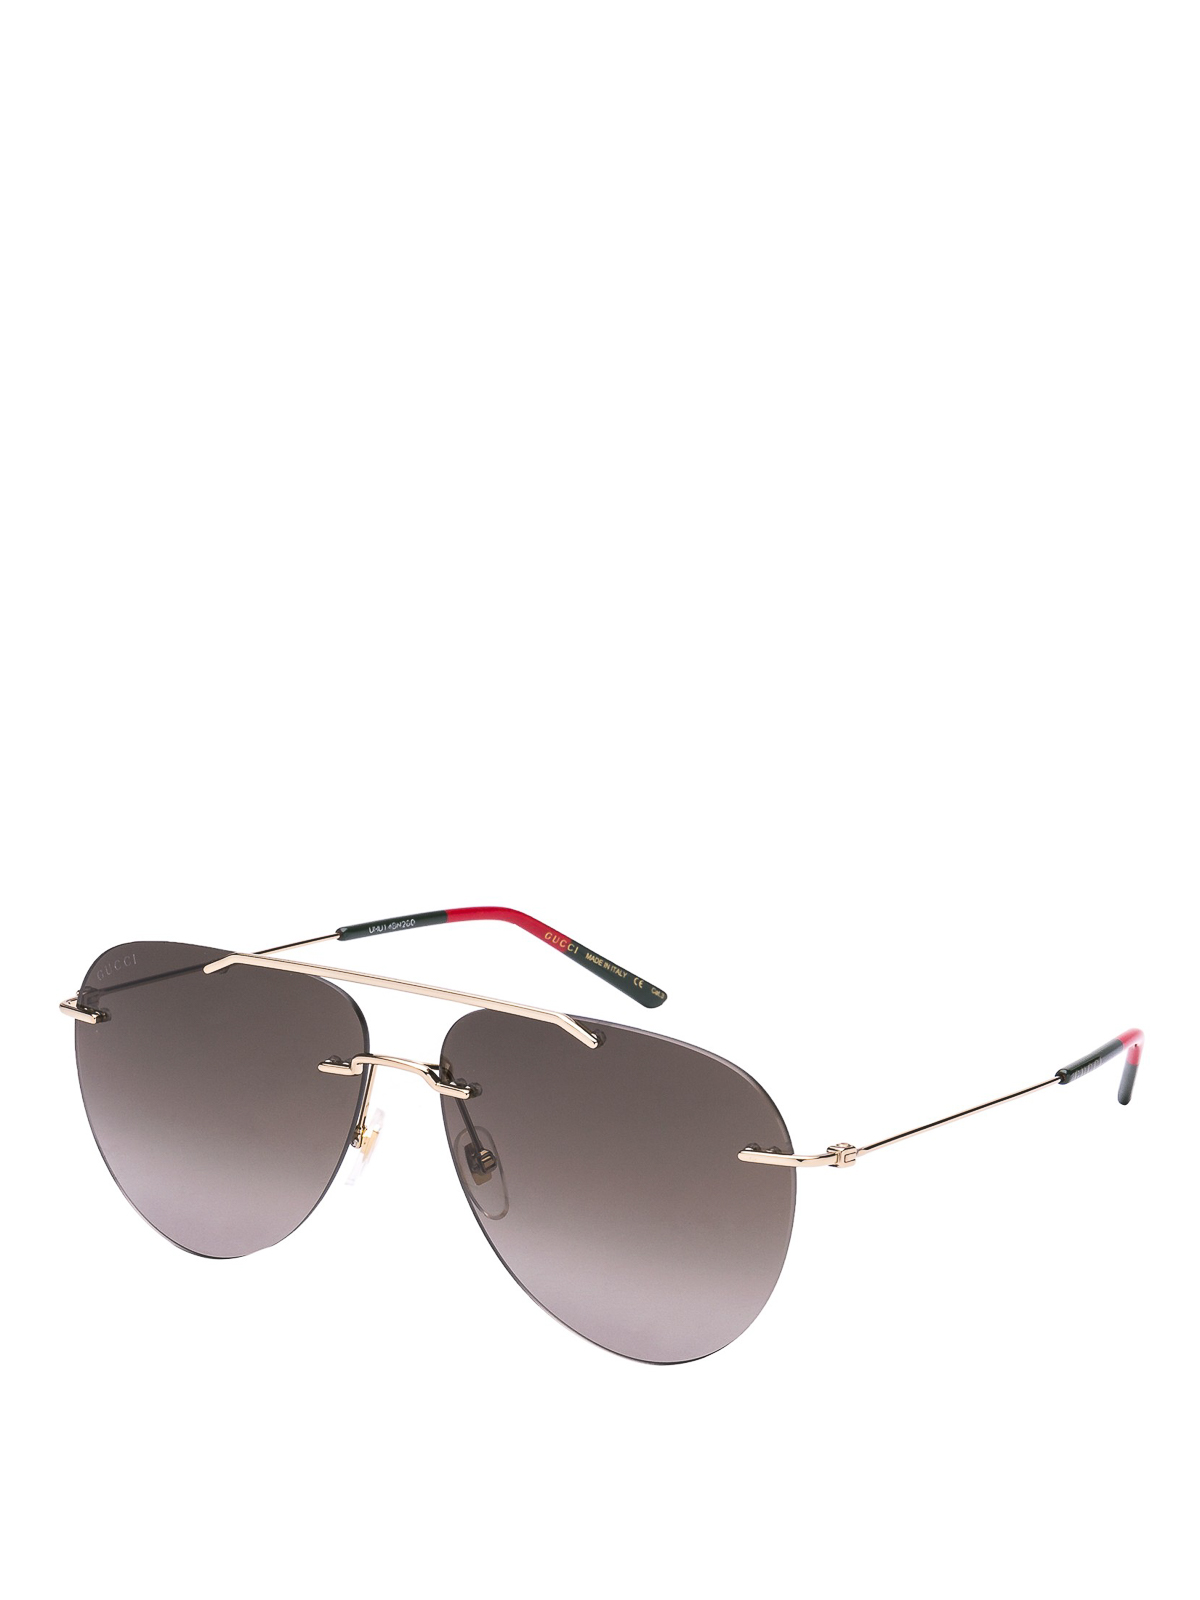 Gucci - Frameless aviator sunglasses 